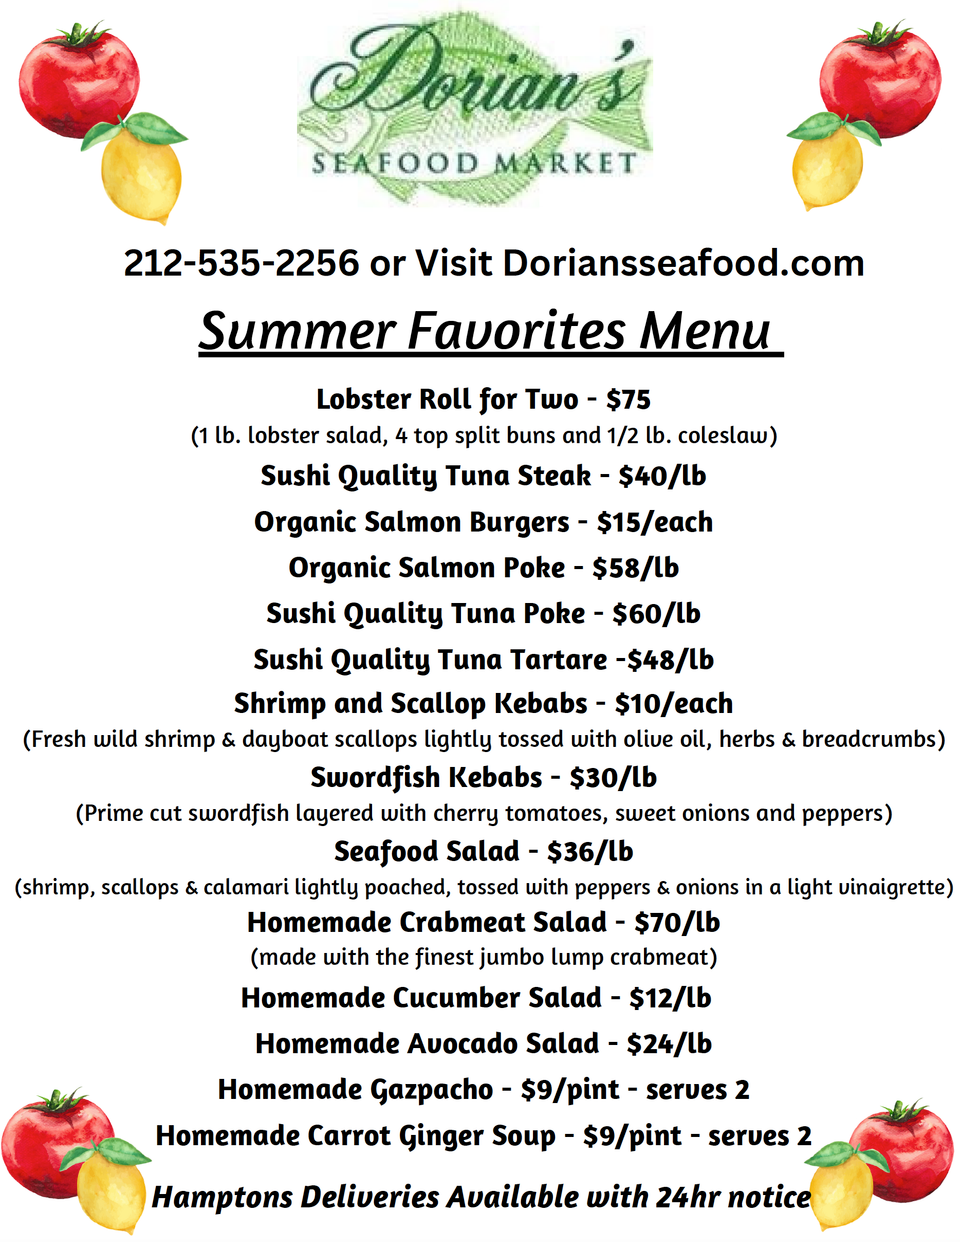 Summer favorites menu